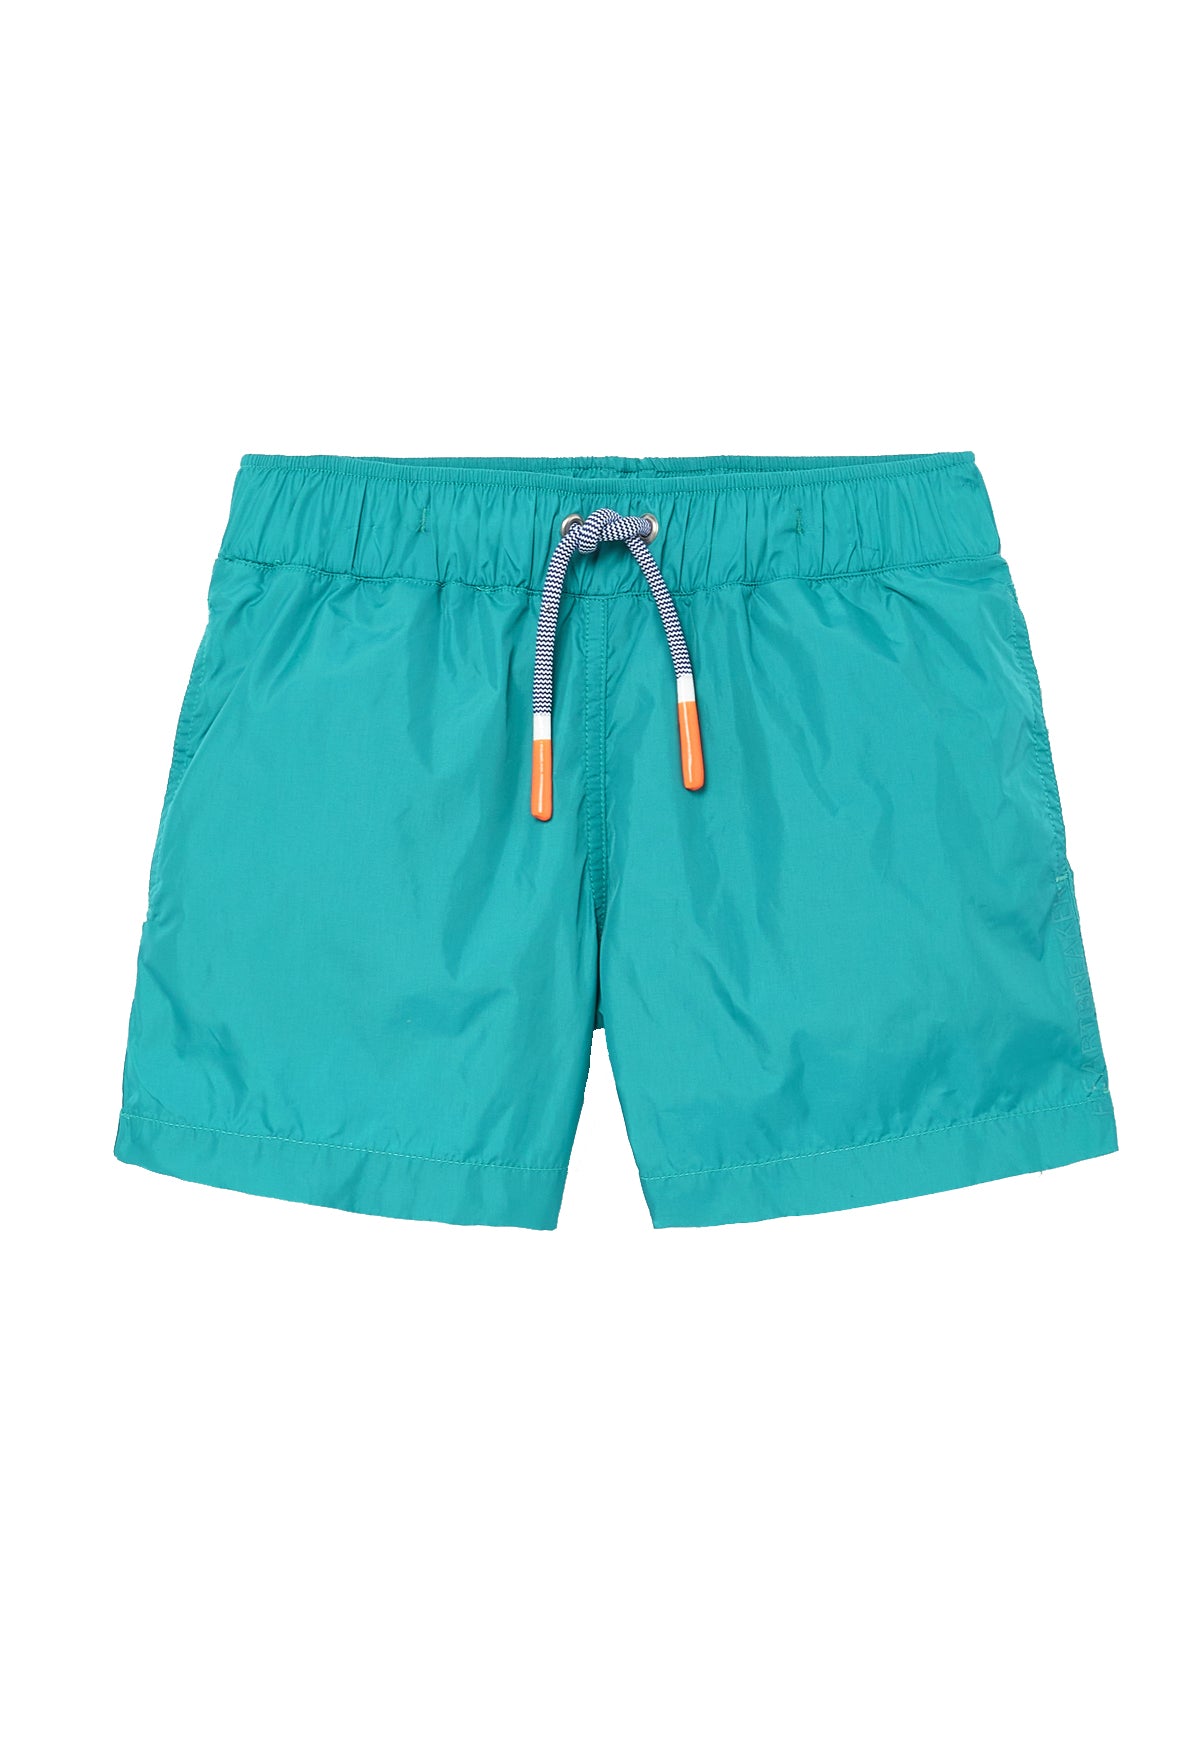 Boys' swim trunks, green